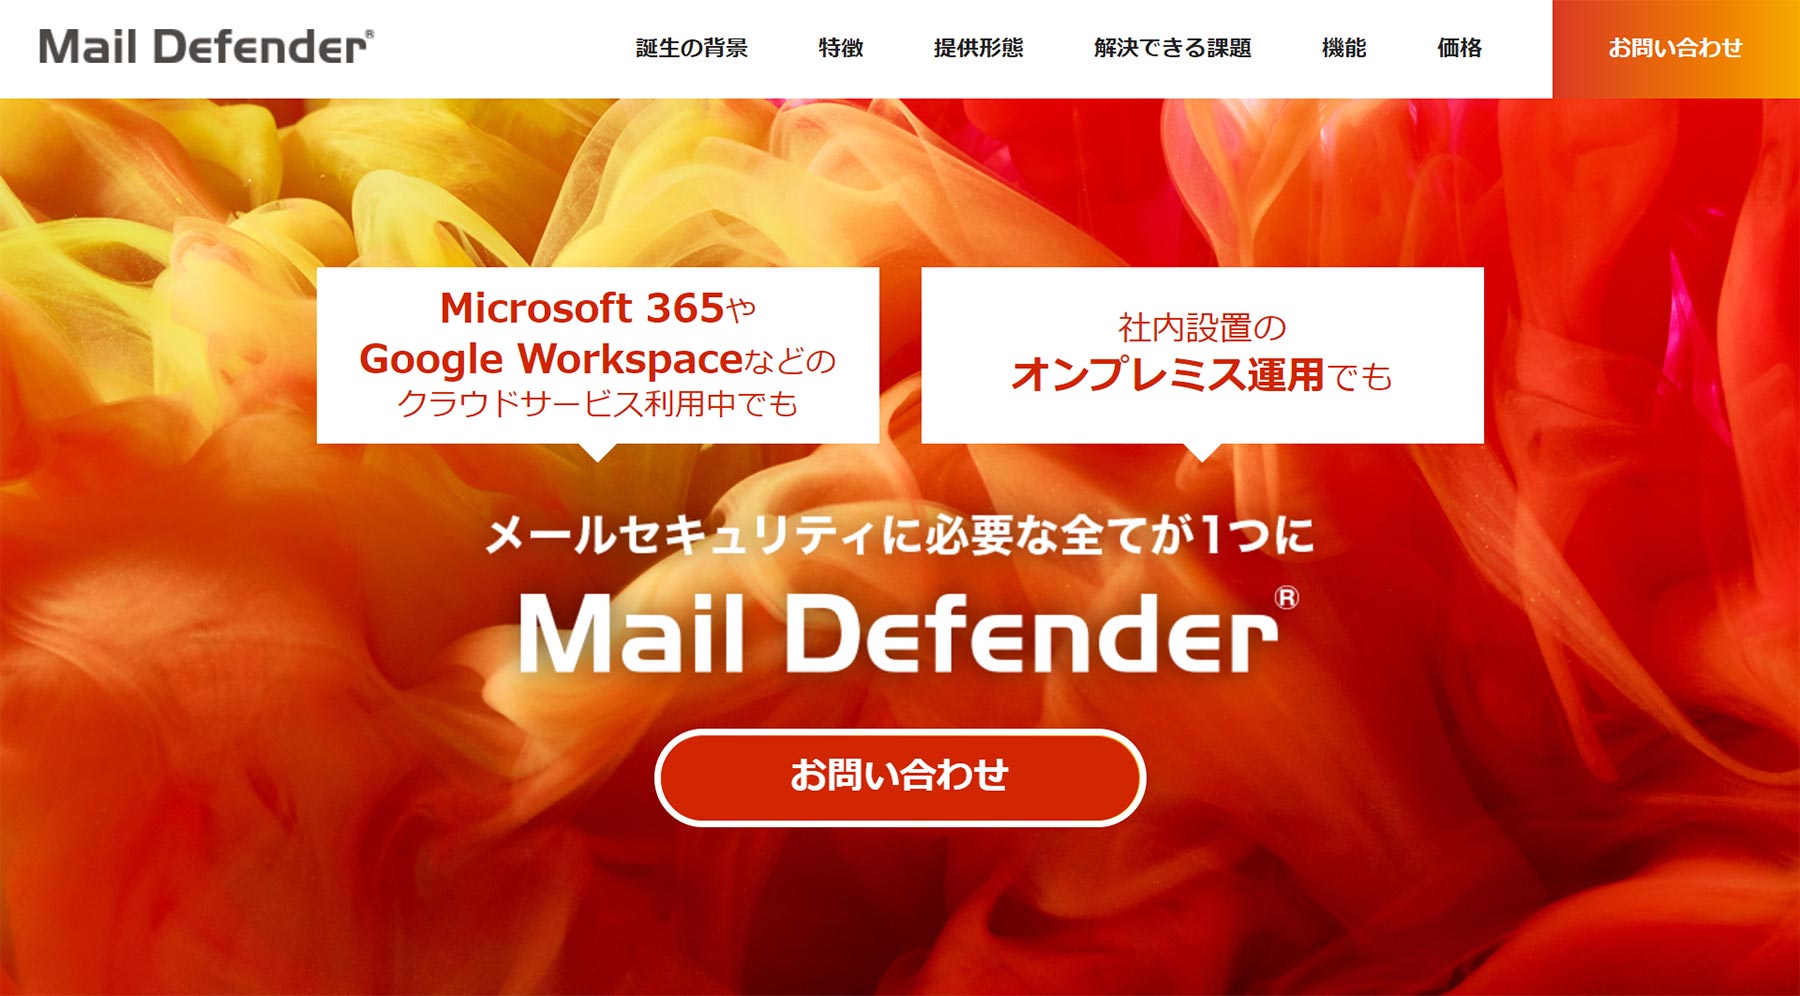 Mail Defender公式サイト